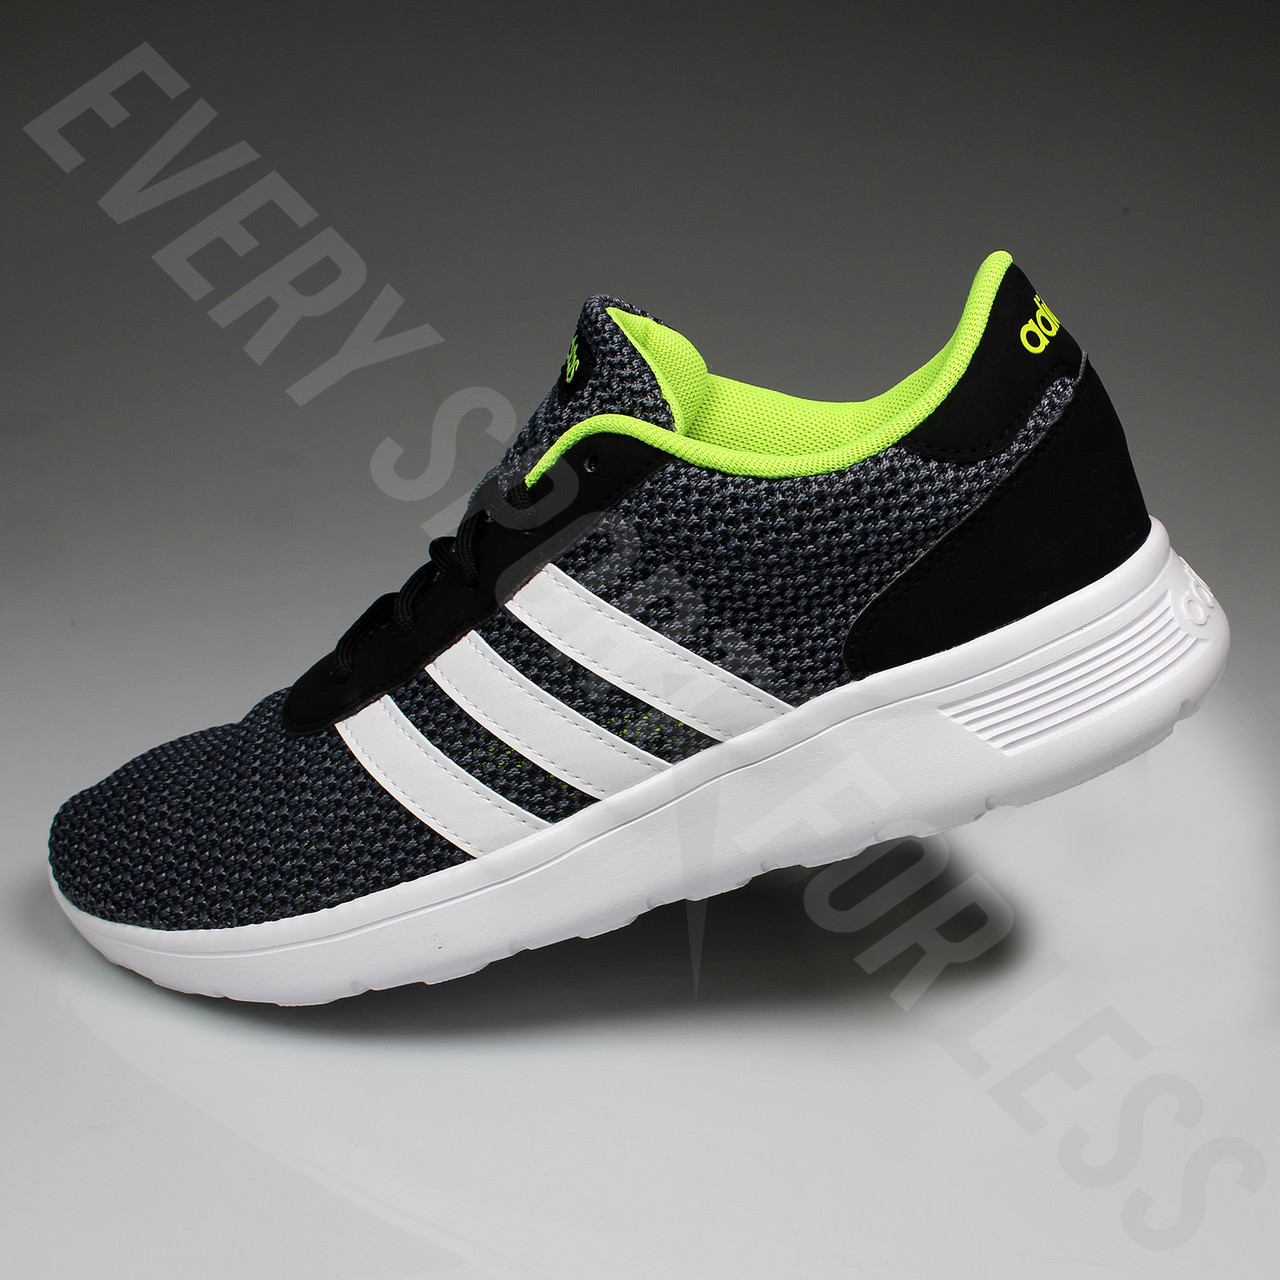 Adidas Neo Lit Racer - Mens - F99417 - Black/White Size 8